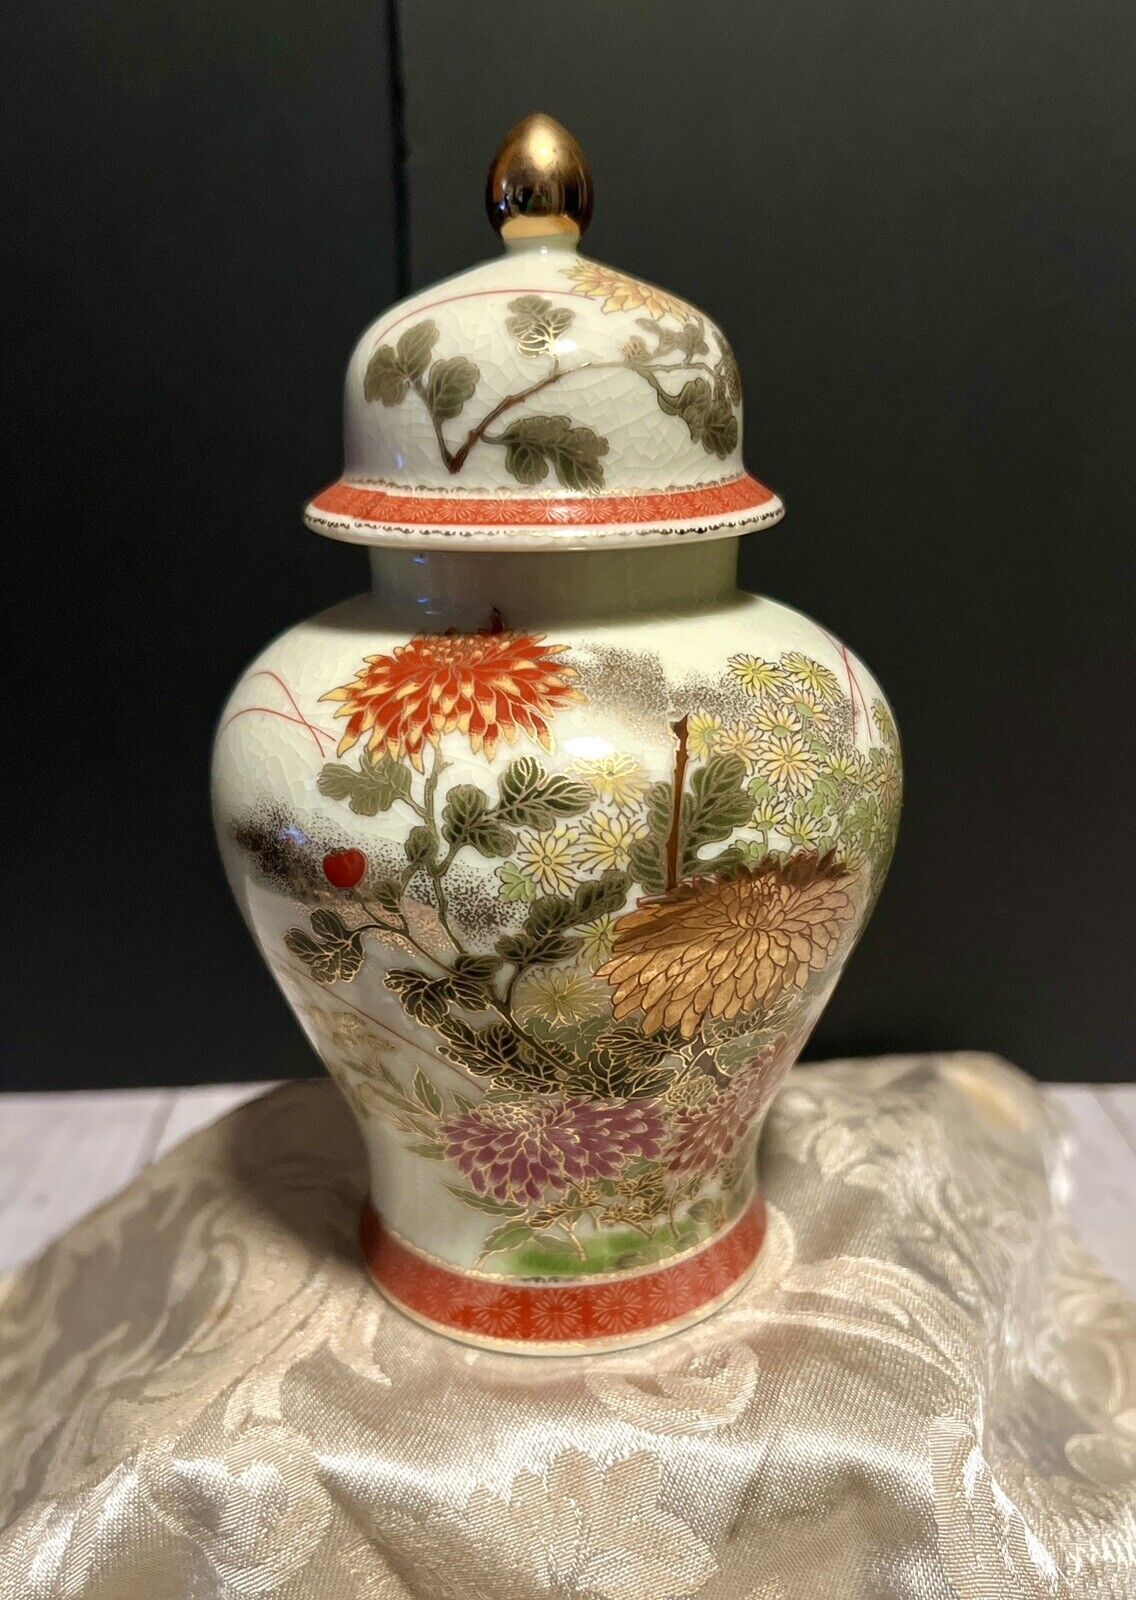 Vintage Satsuma Ginger Jar with Peacocks and Peonies - Japan C1